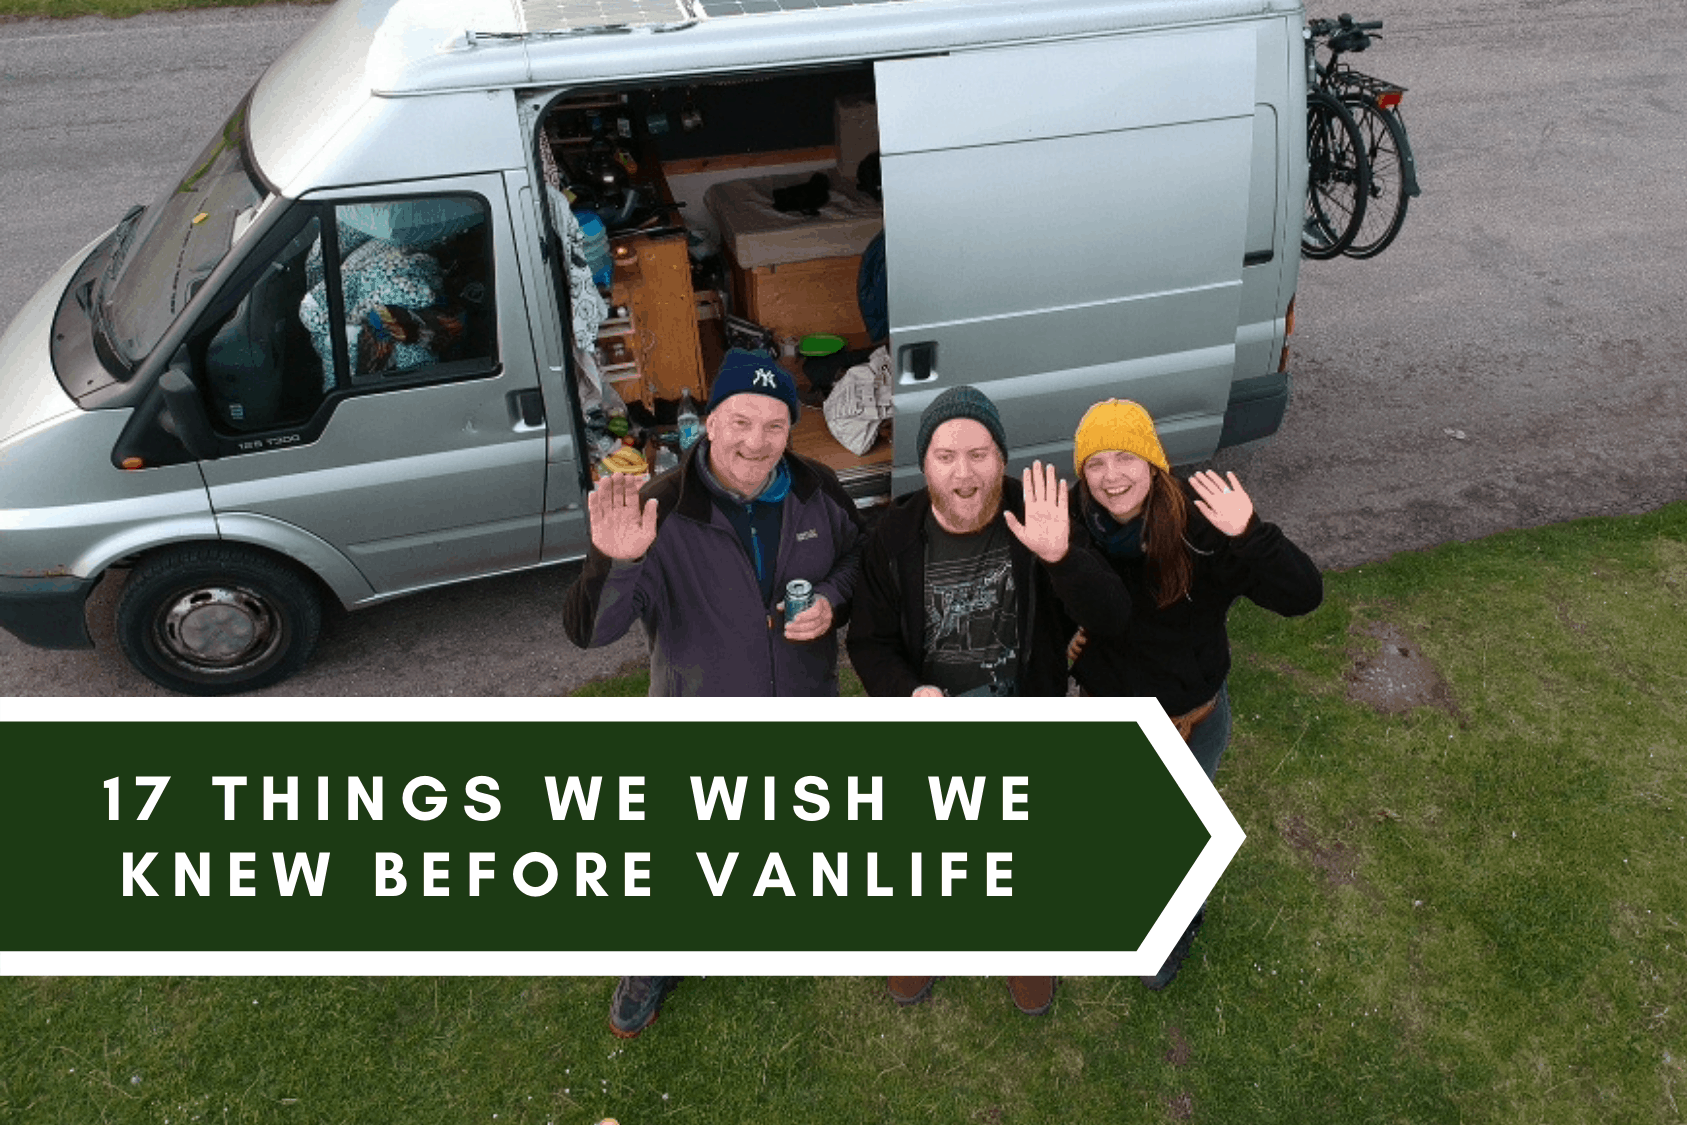 What we wish we knew vanlife